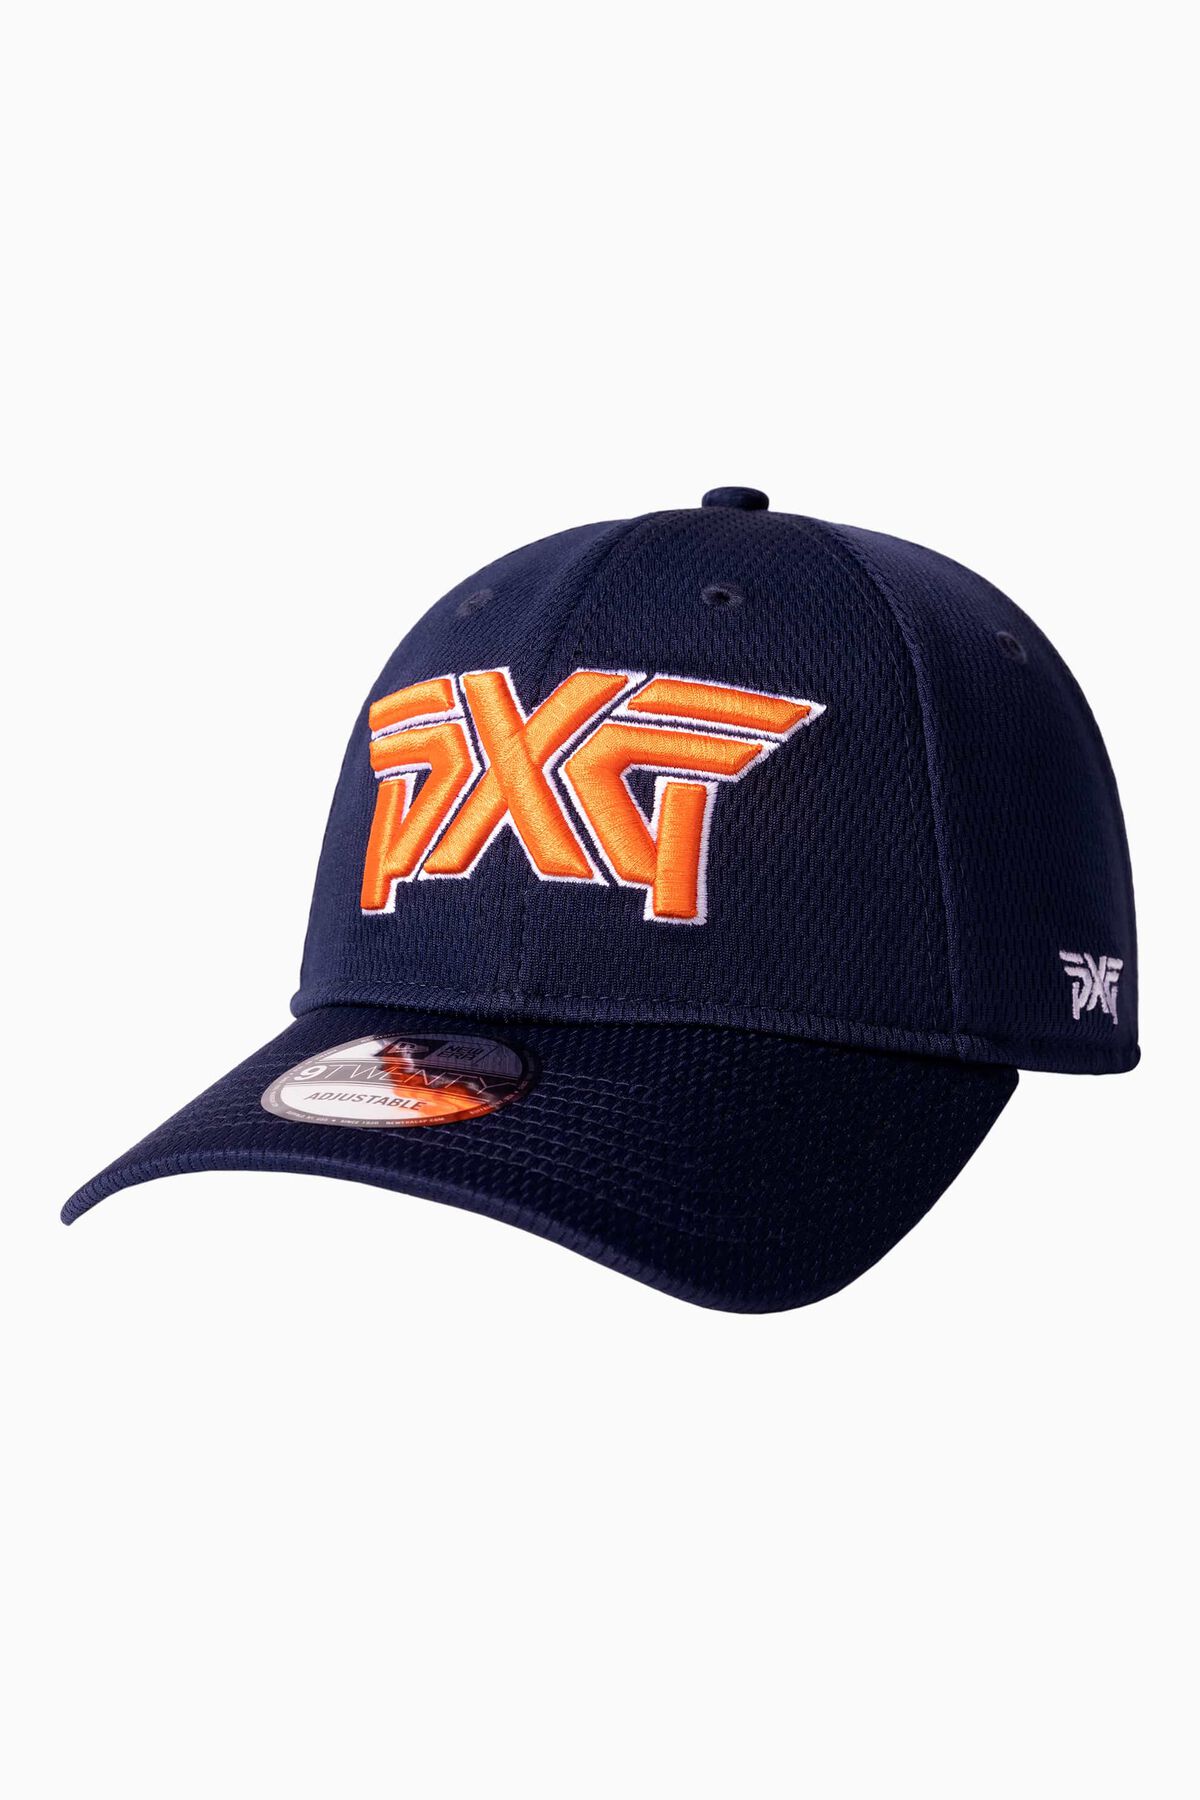 PXG Denver Navy/Orange 9TWENTY Adjustable Cap 